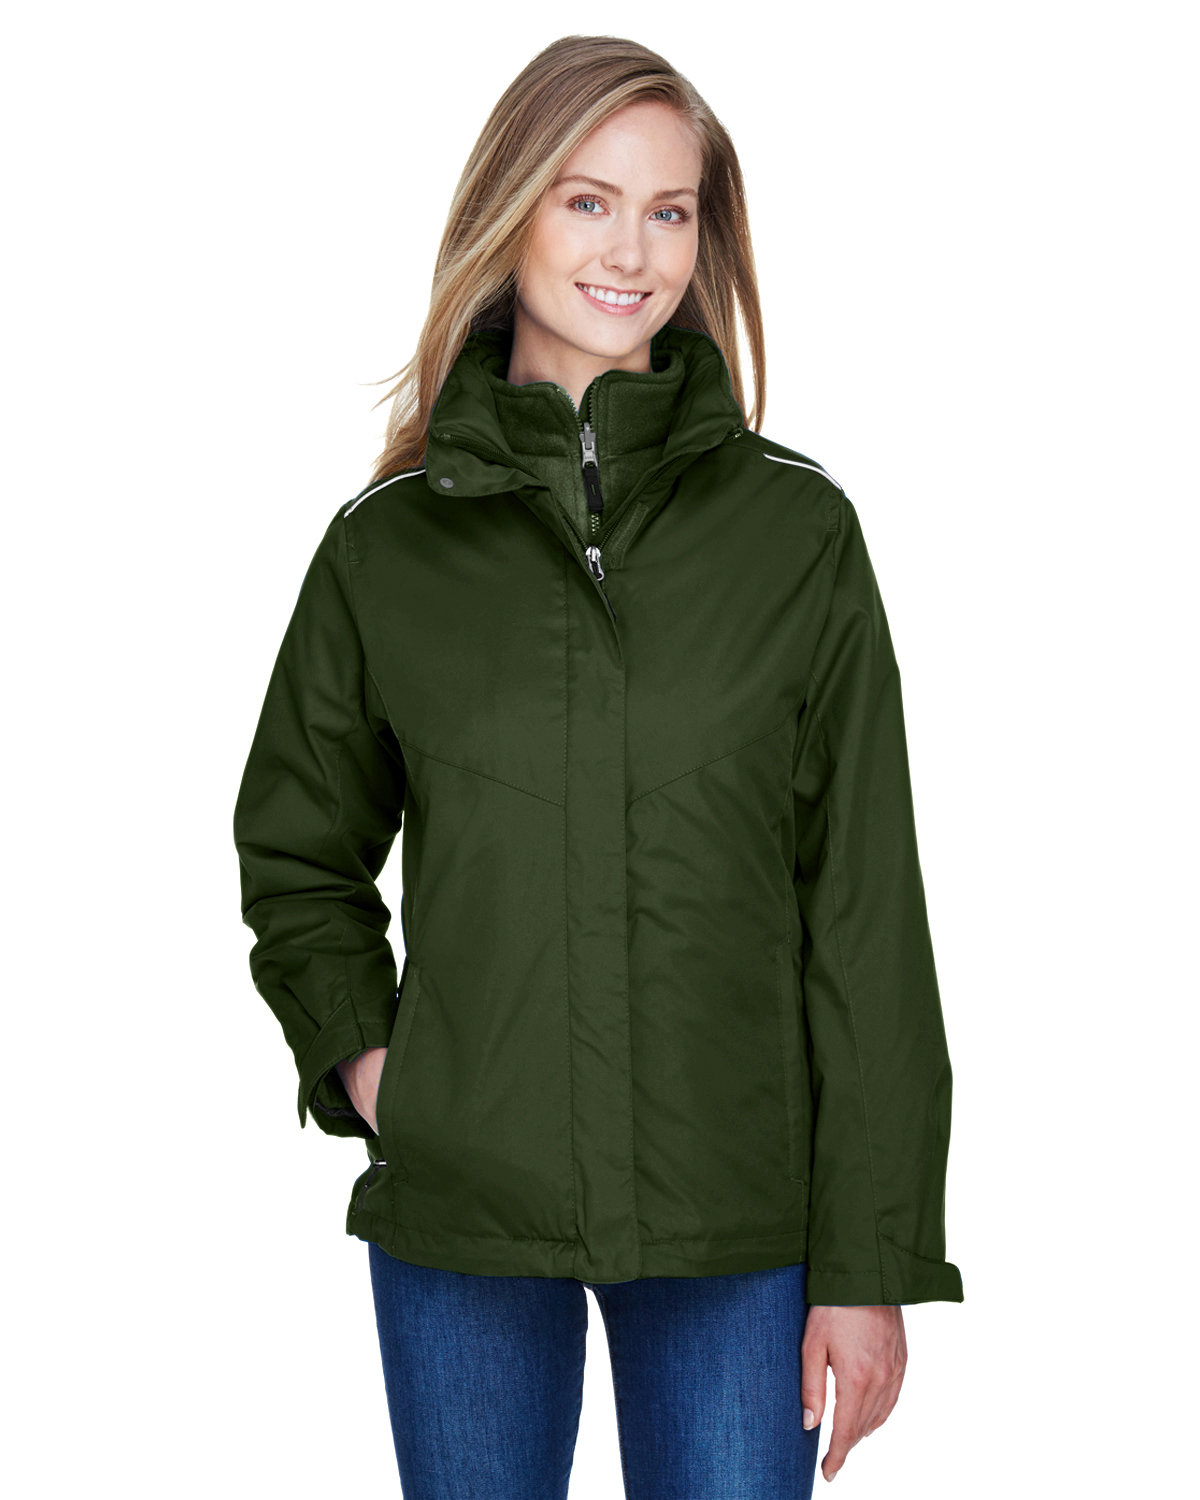 Core 365 Ladies' Region 3-in-1 Jacket with Fleece Liner FOREST 